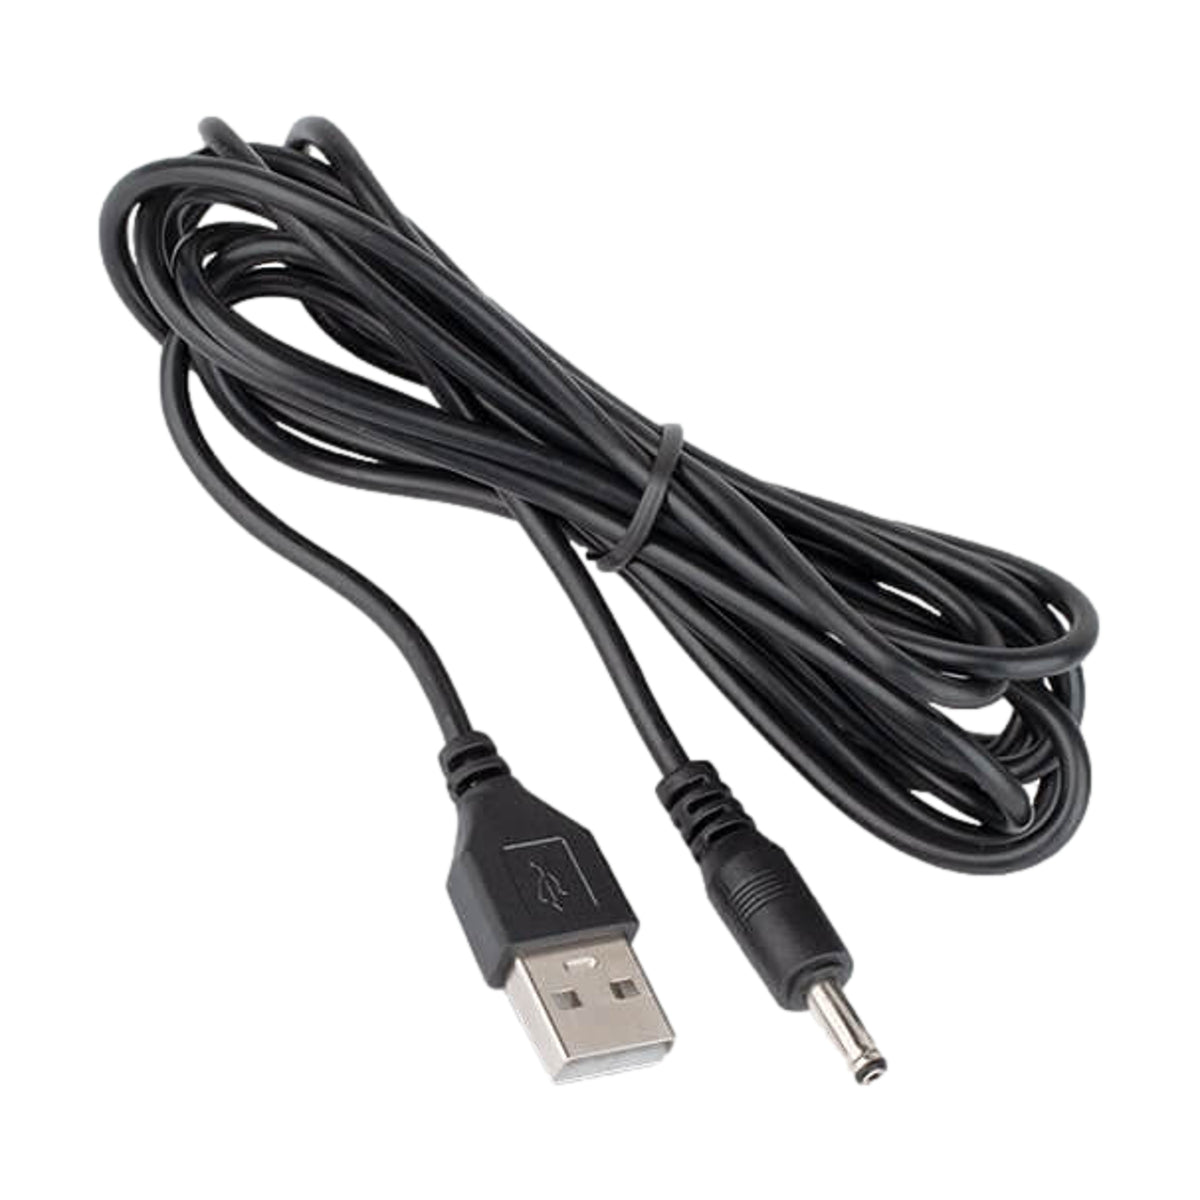 Australasian USB Power Cable